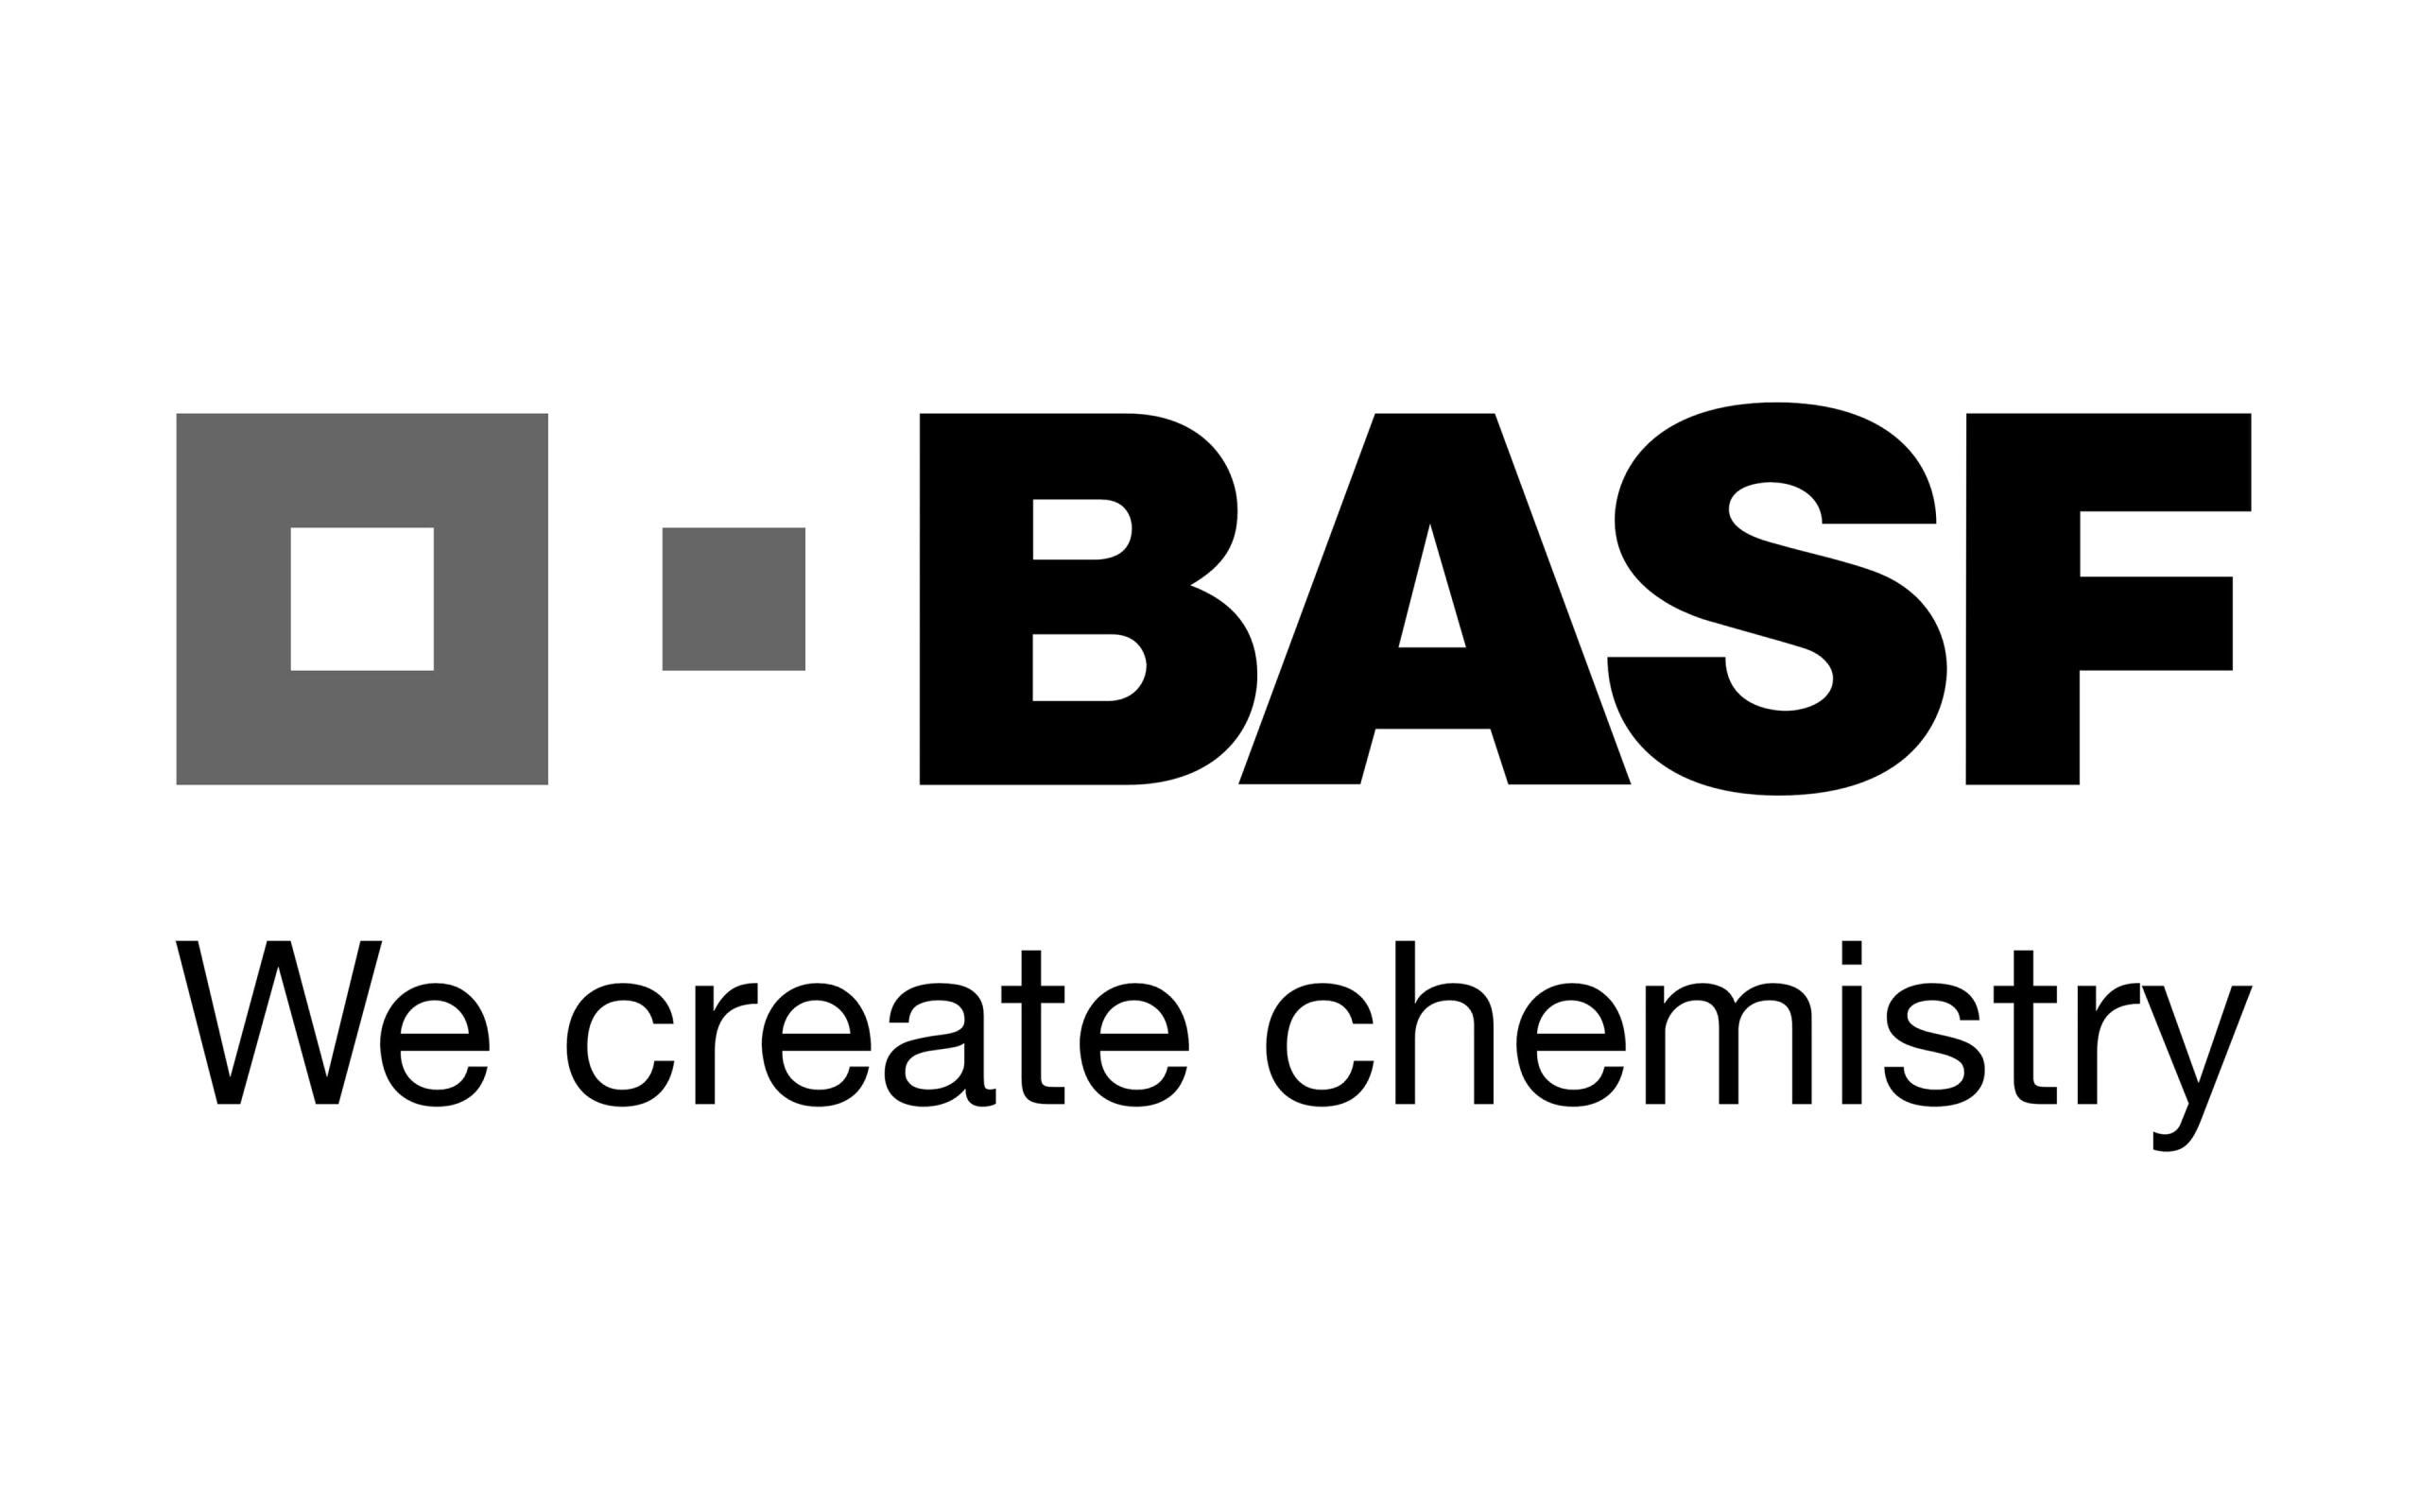 BASF-Logo heartland investment